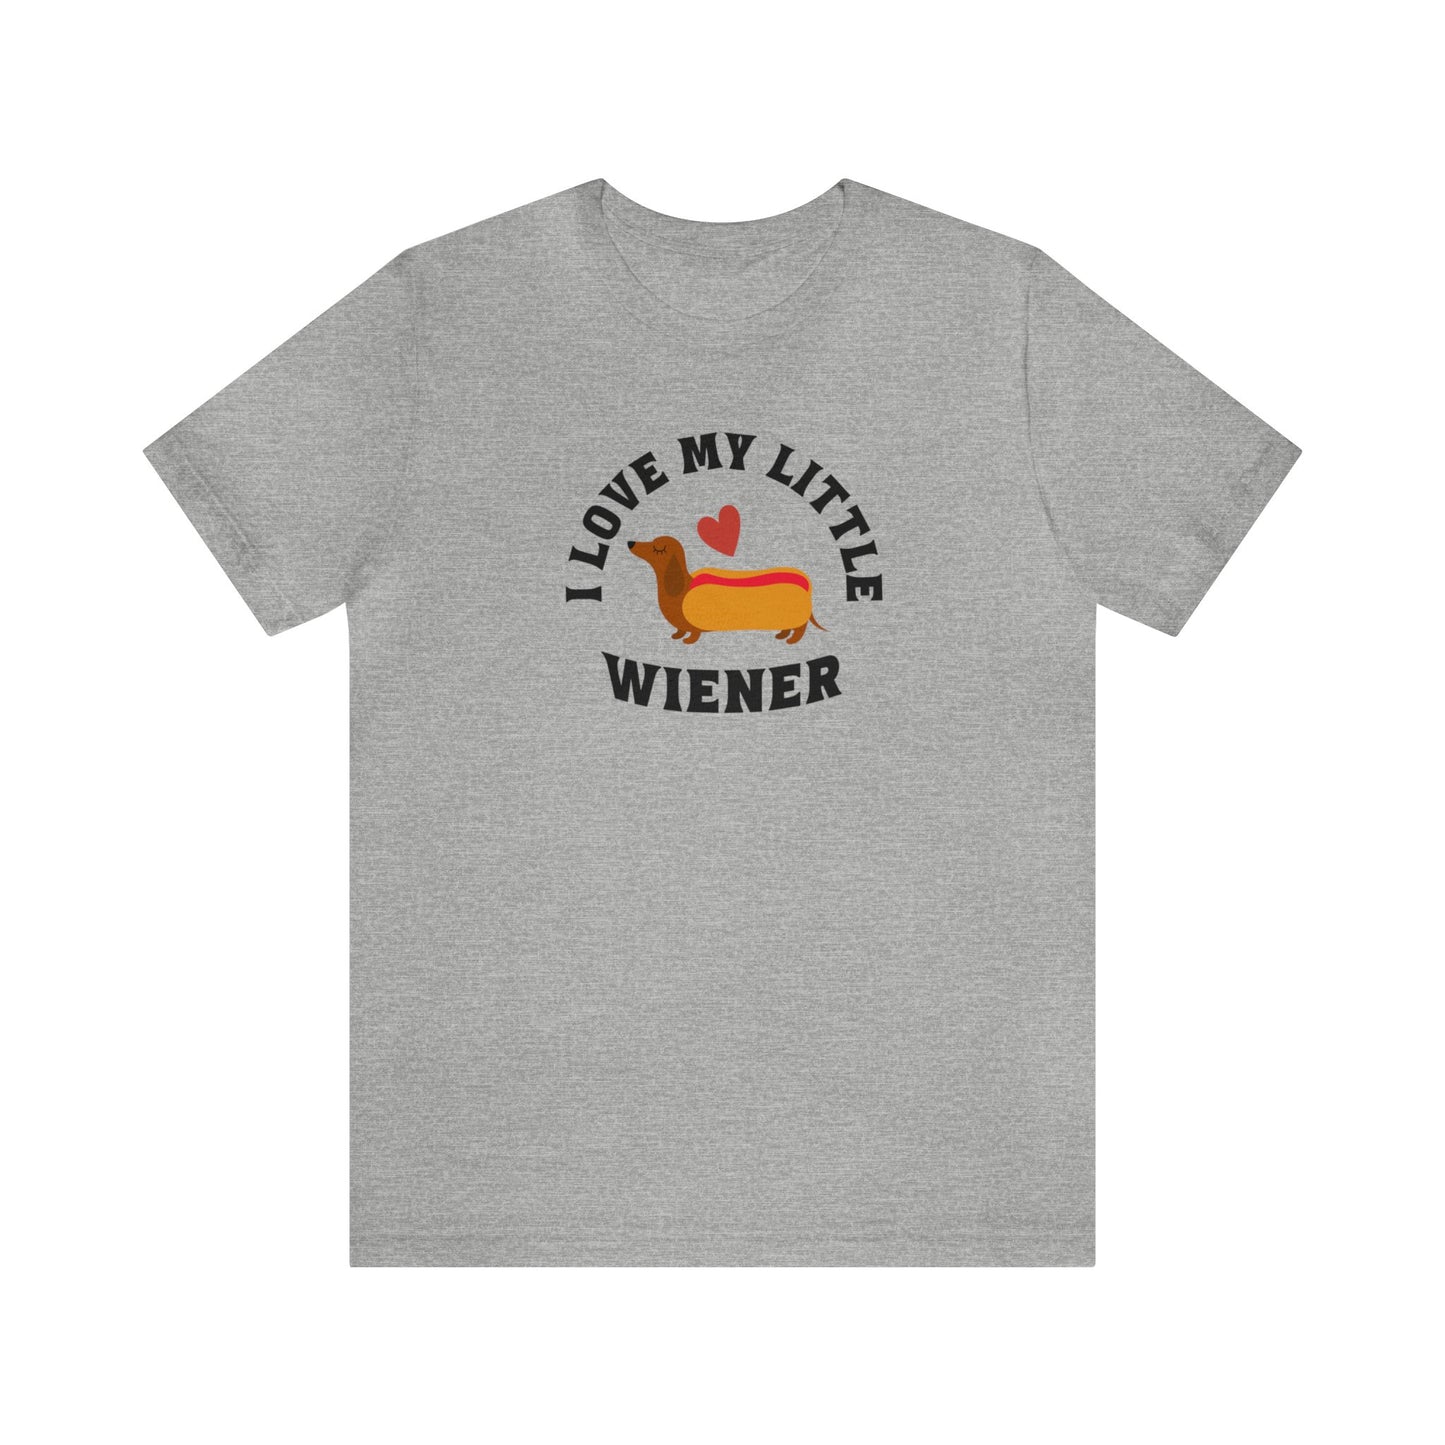 Dachshund Dog Funny Shirt - I Love My Little Wiener Shirt